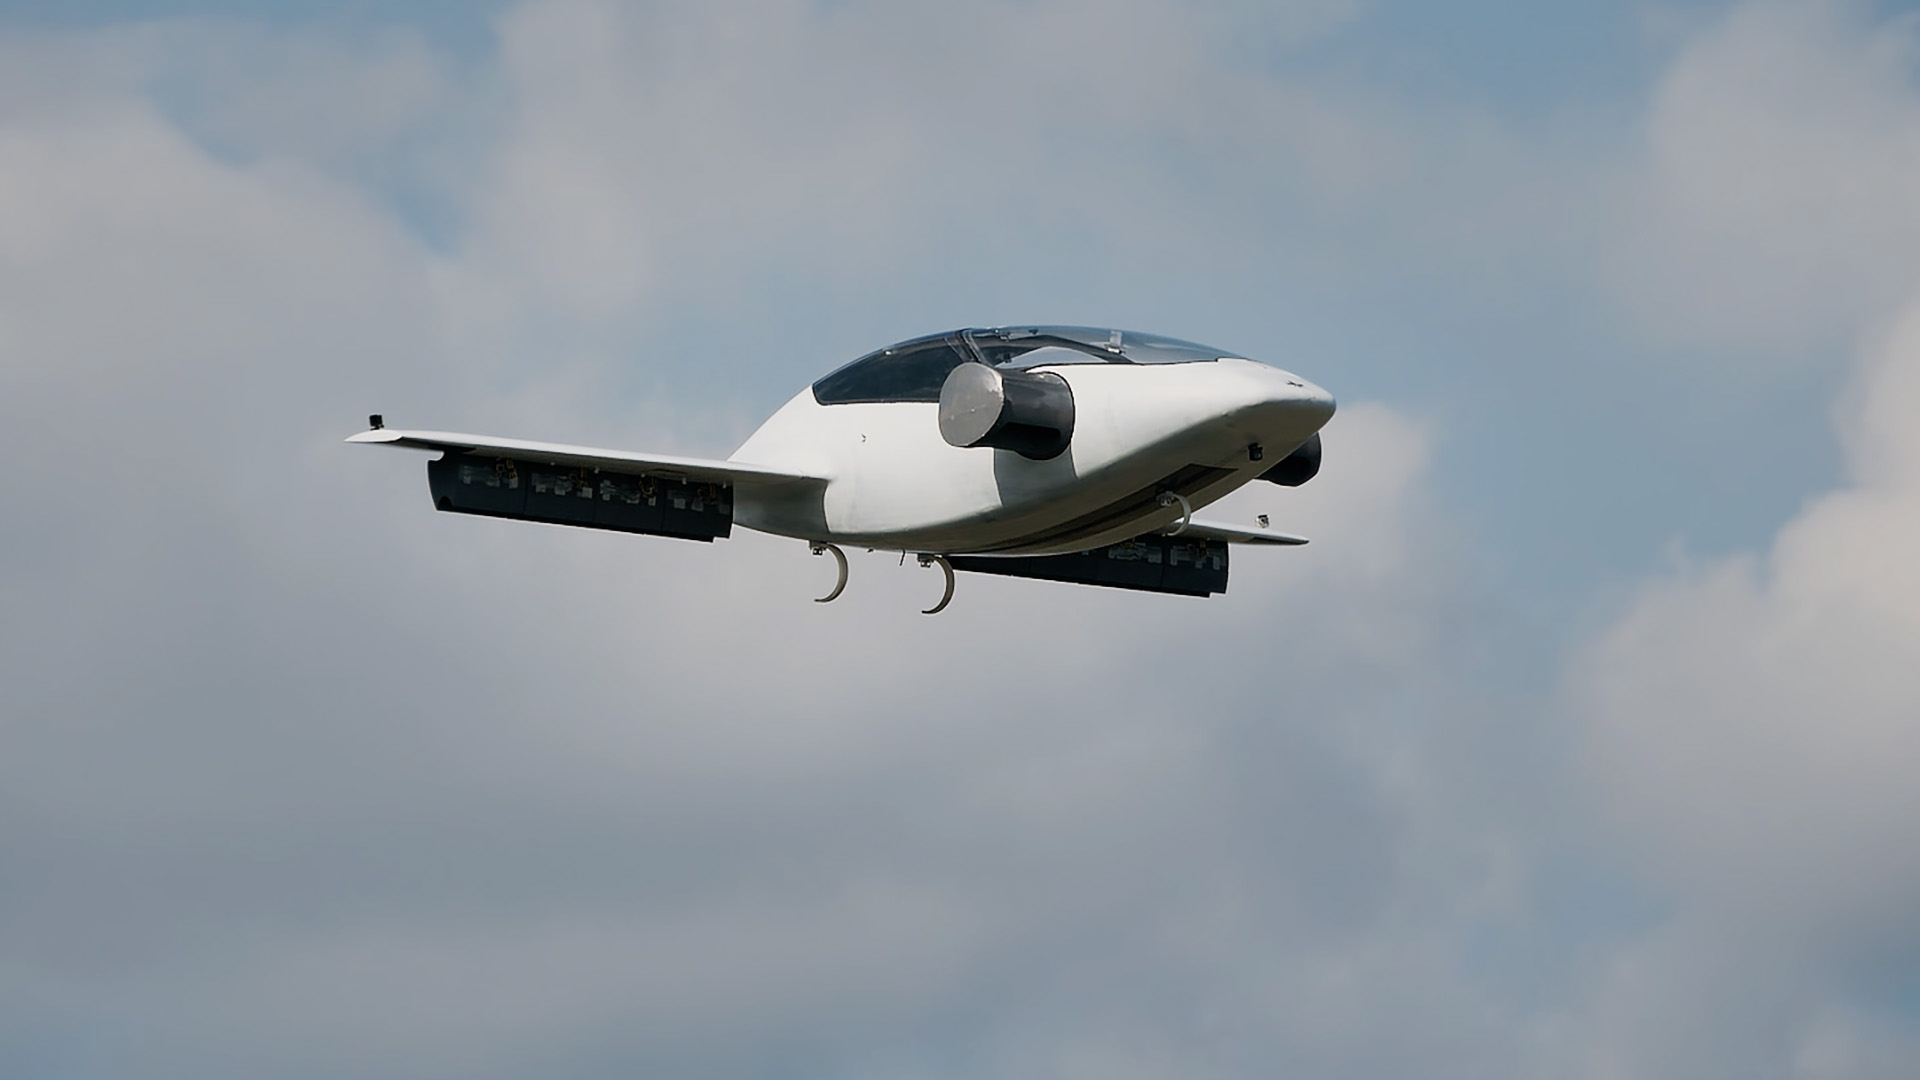 Prototyp latajacego pojazdu Lilium